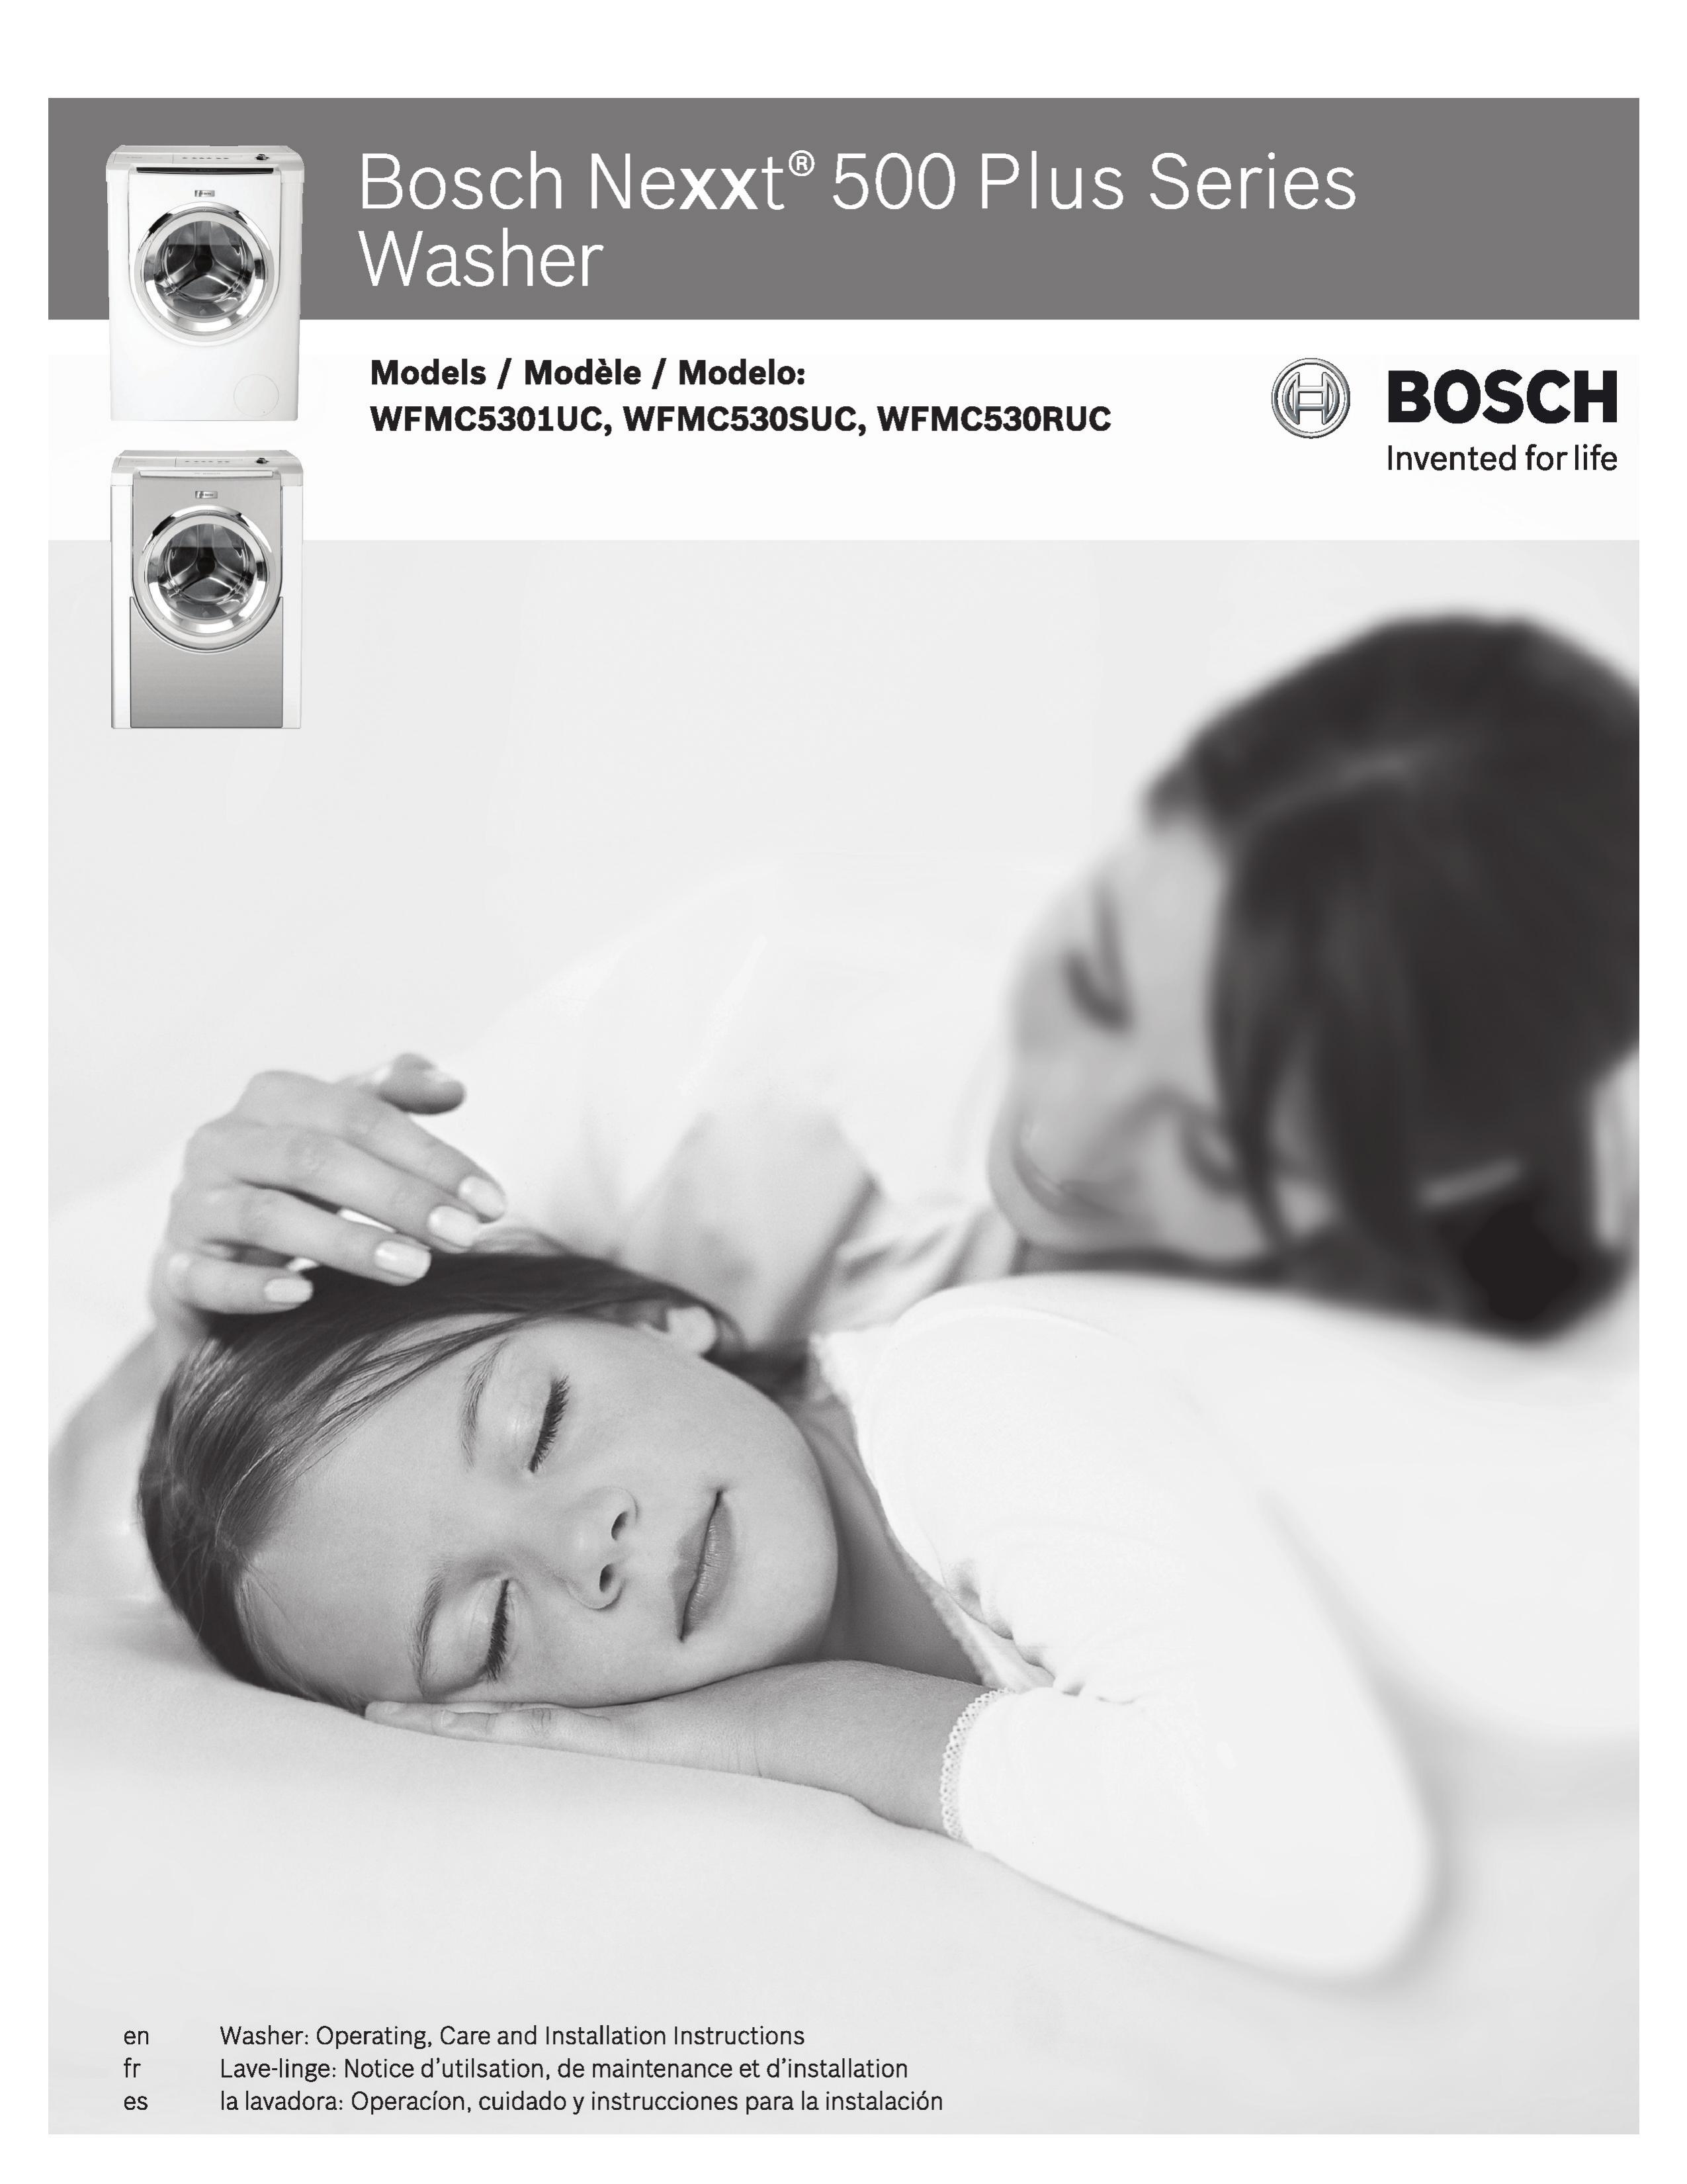 Bosch Appliances WFMC530RUC Washer/Dryer User Manual